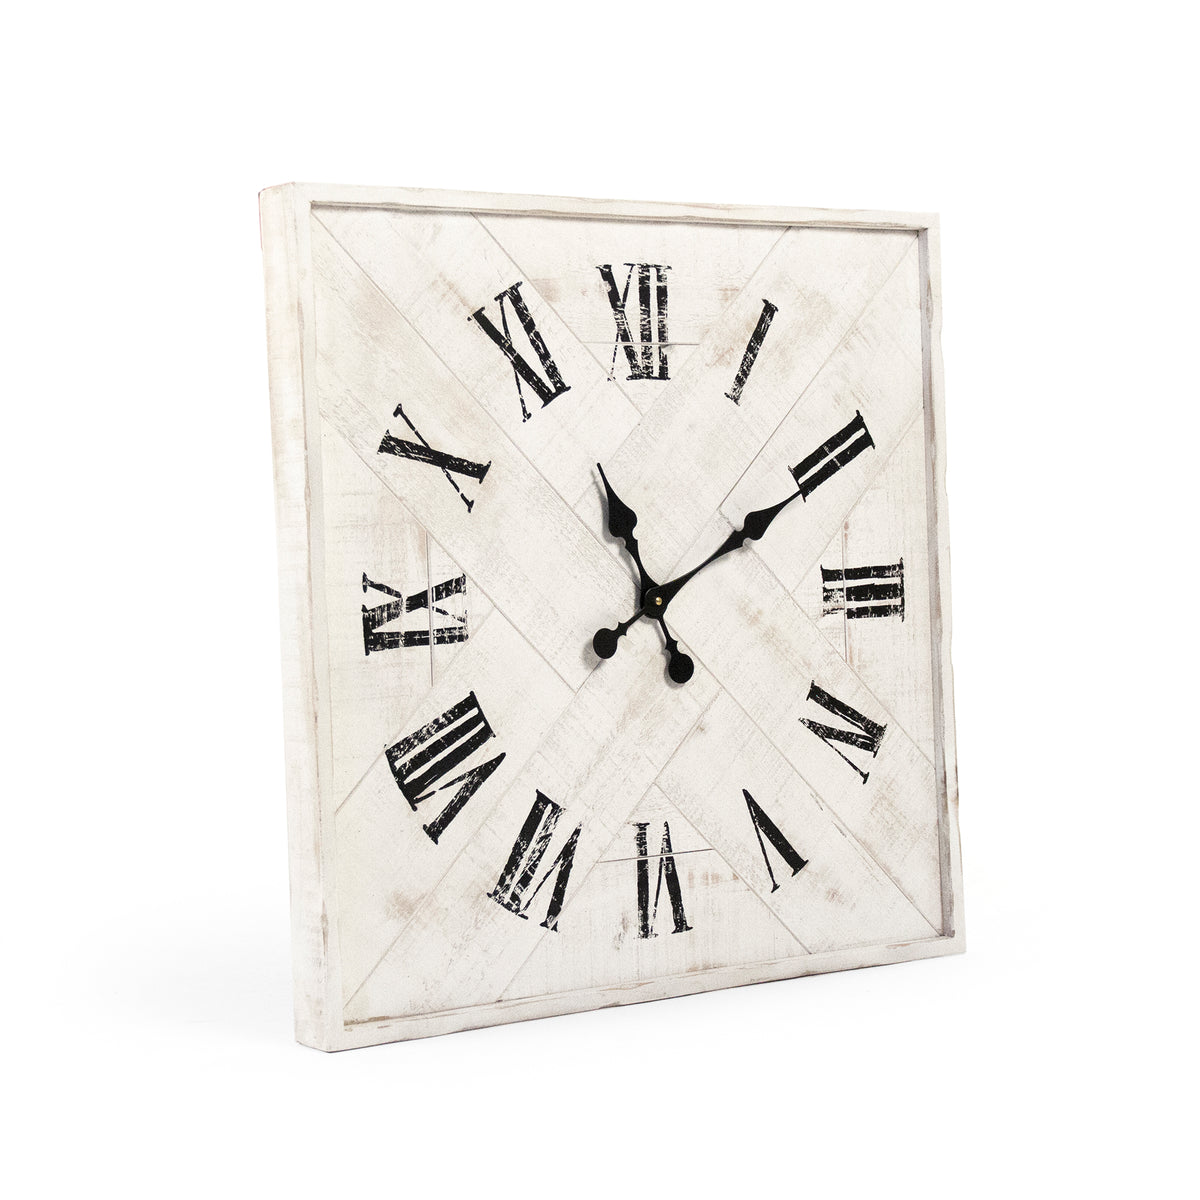 Corbett Wall Clock by Zentique